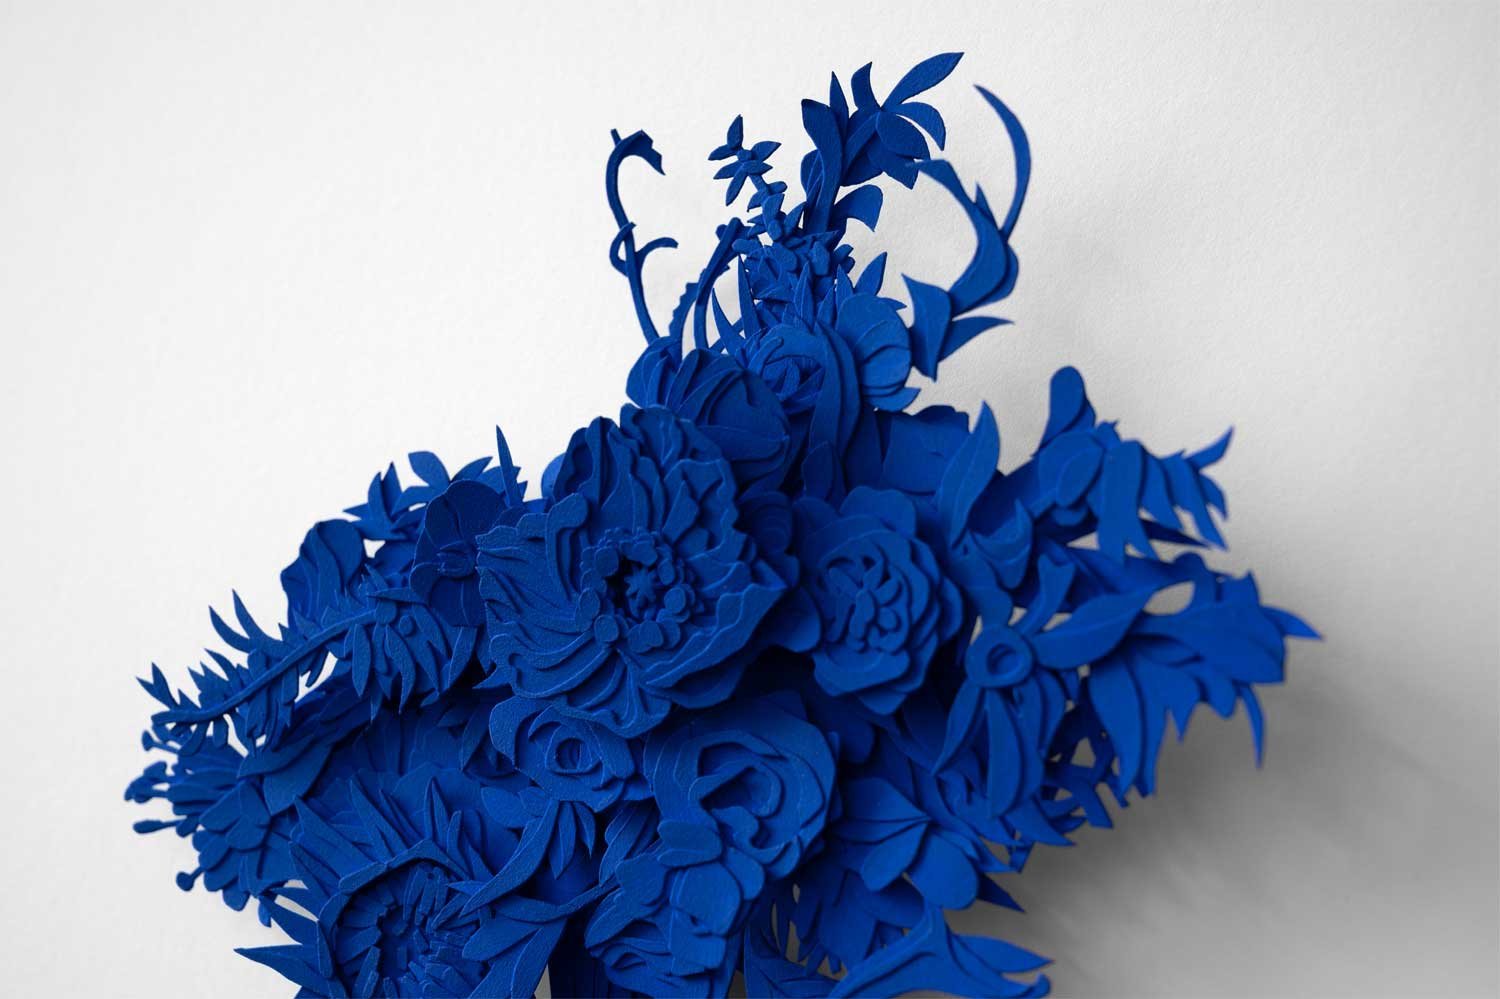 joey-bates-paper-sculpture-explosion-15-detail.jpg